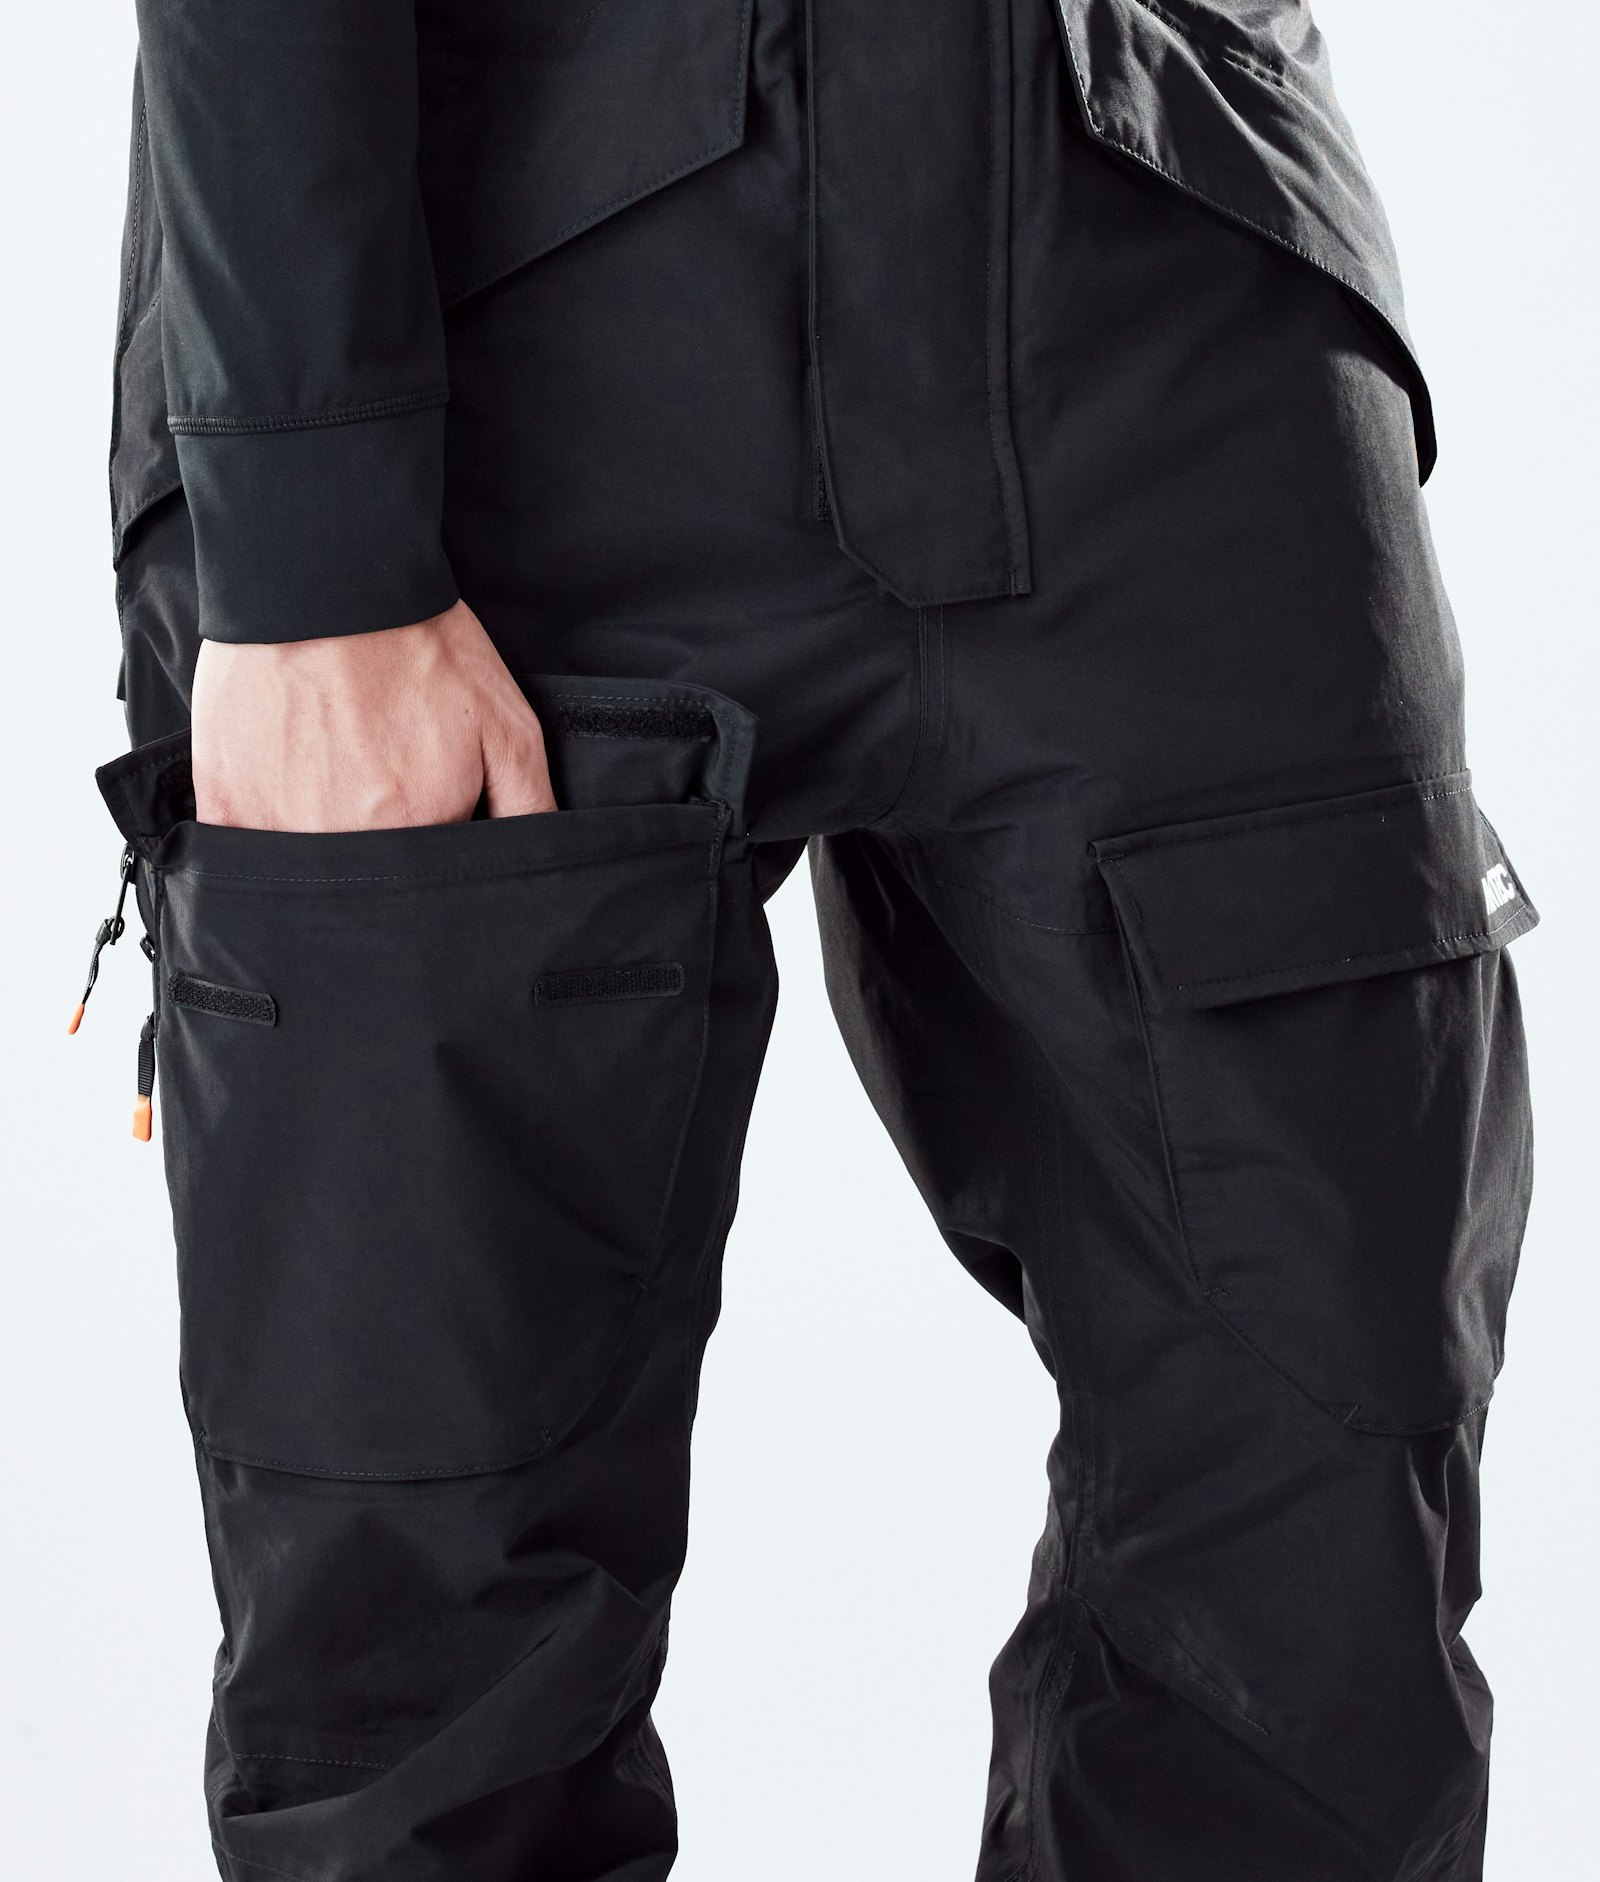 Fawk 2020 Snowboard Pants Men Black